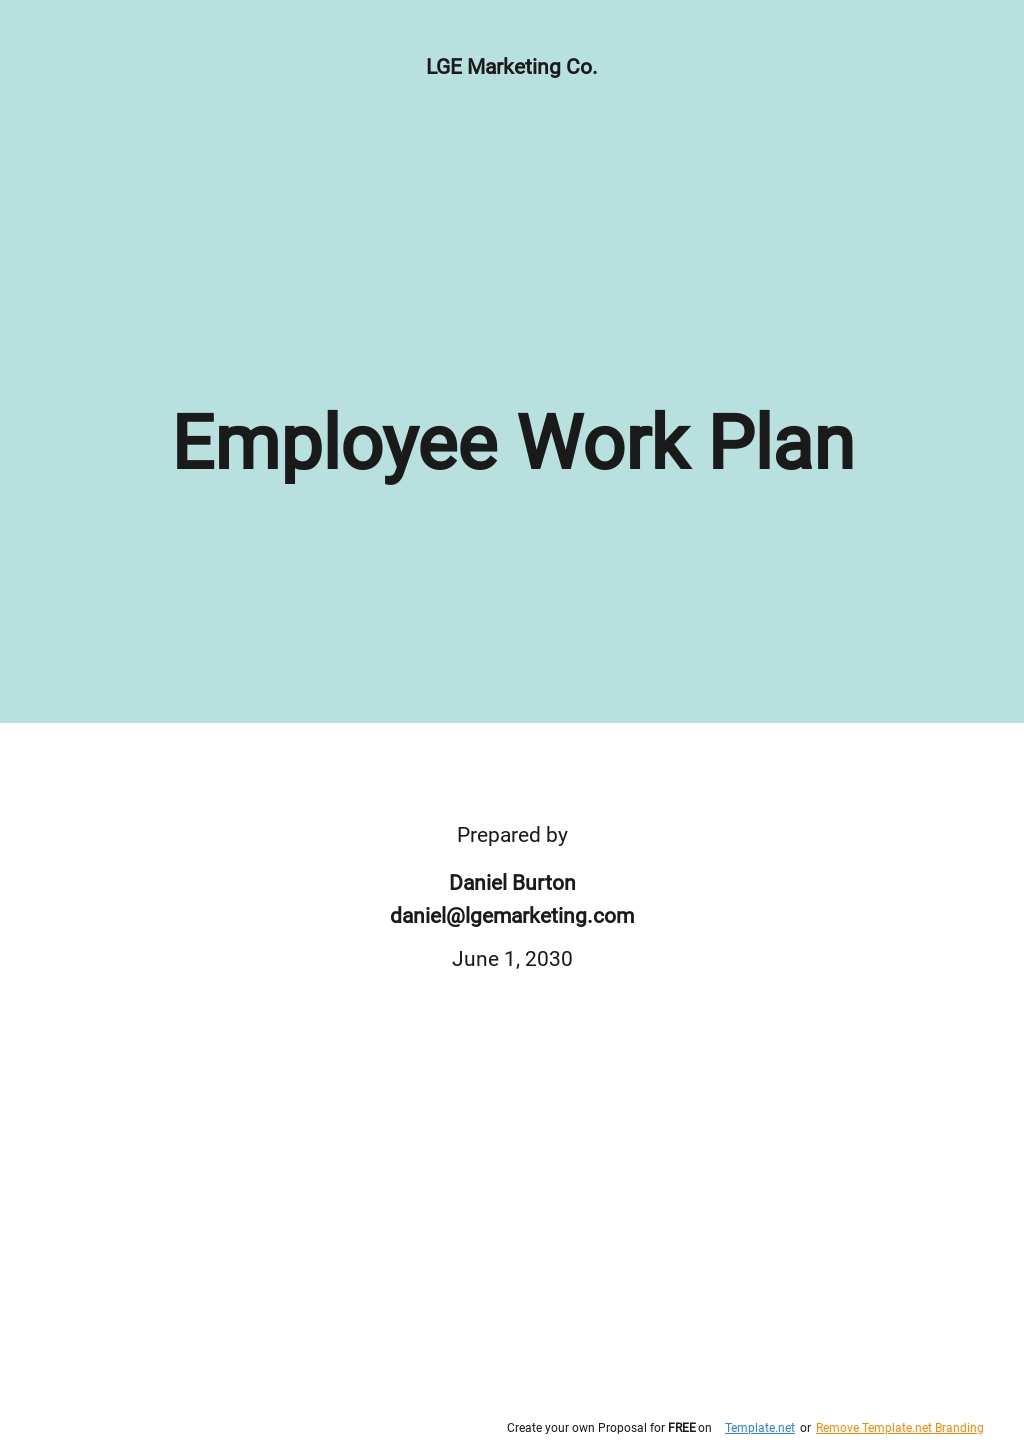 Sample Employee Work Plan Template.jpe